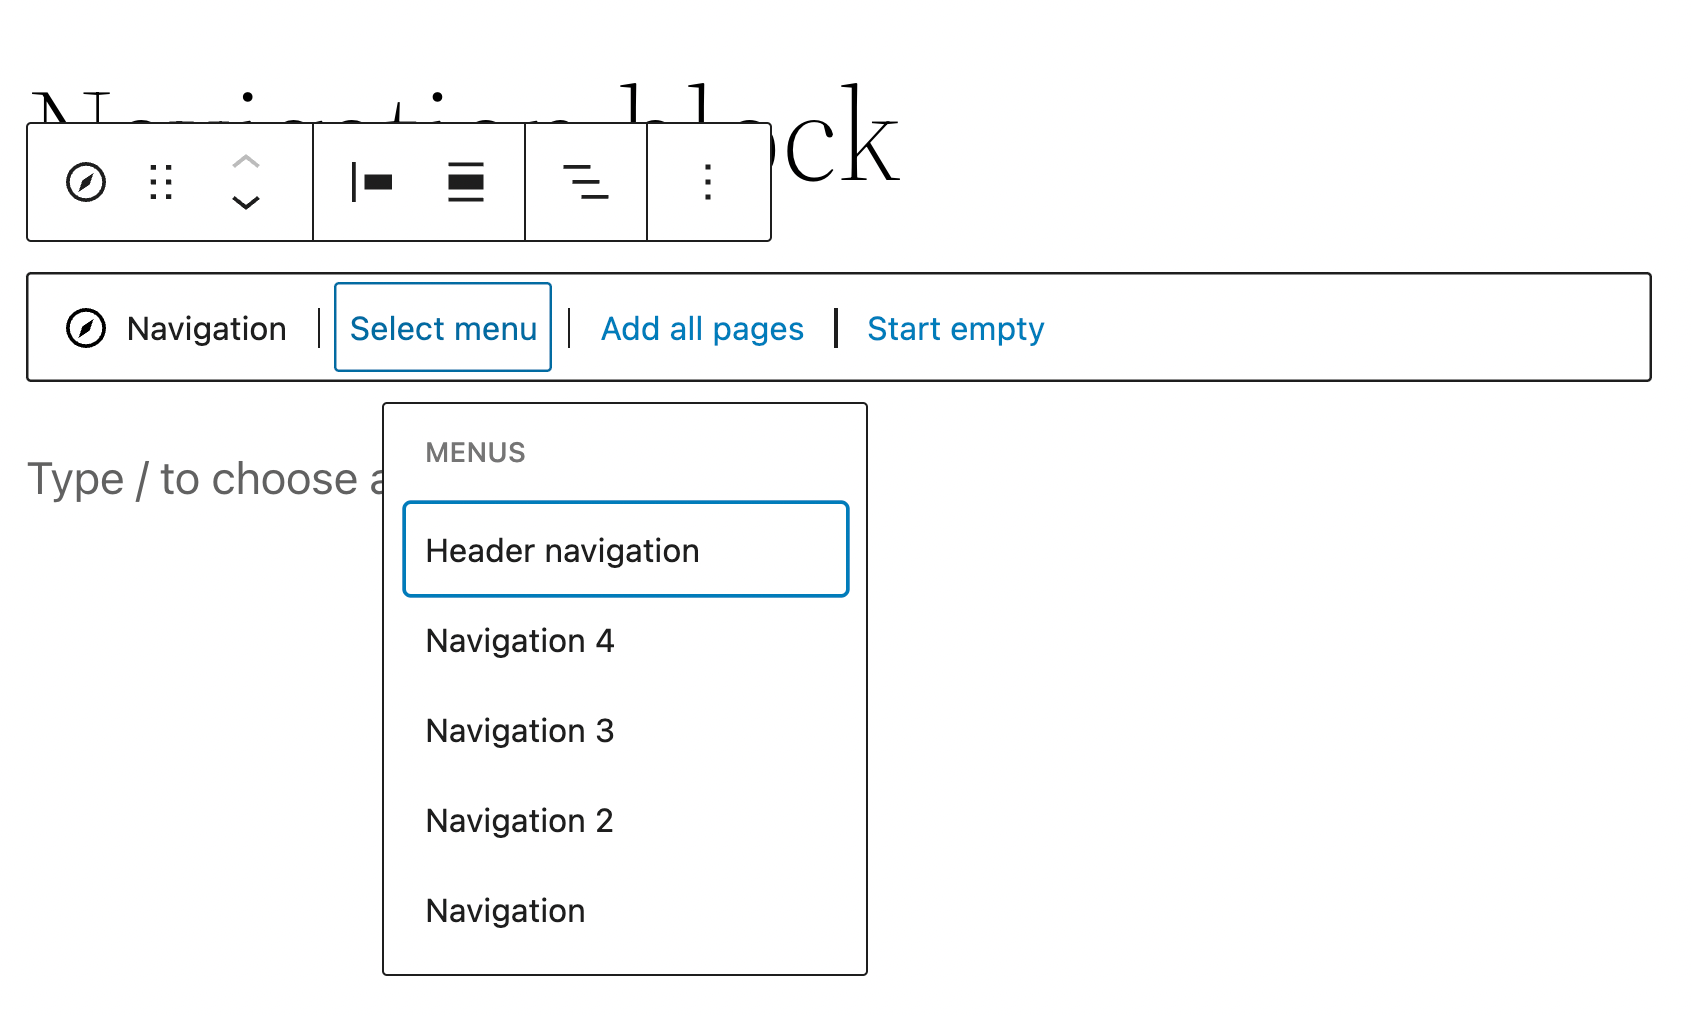 Select a menu in the Navigation block.